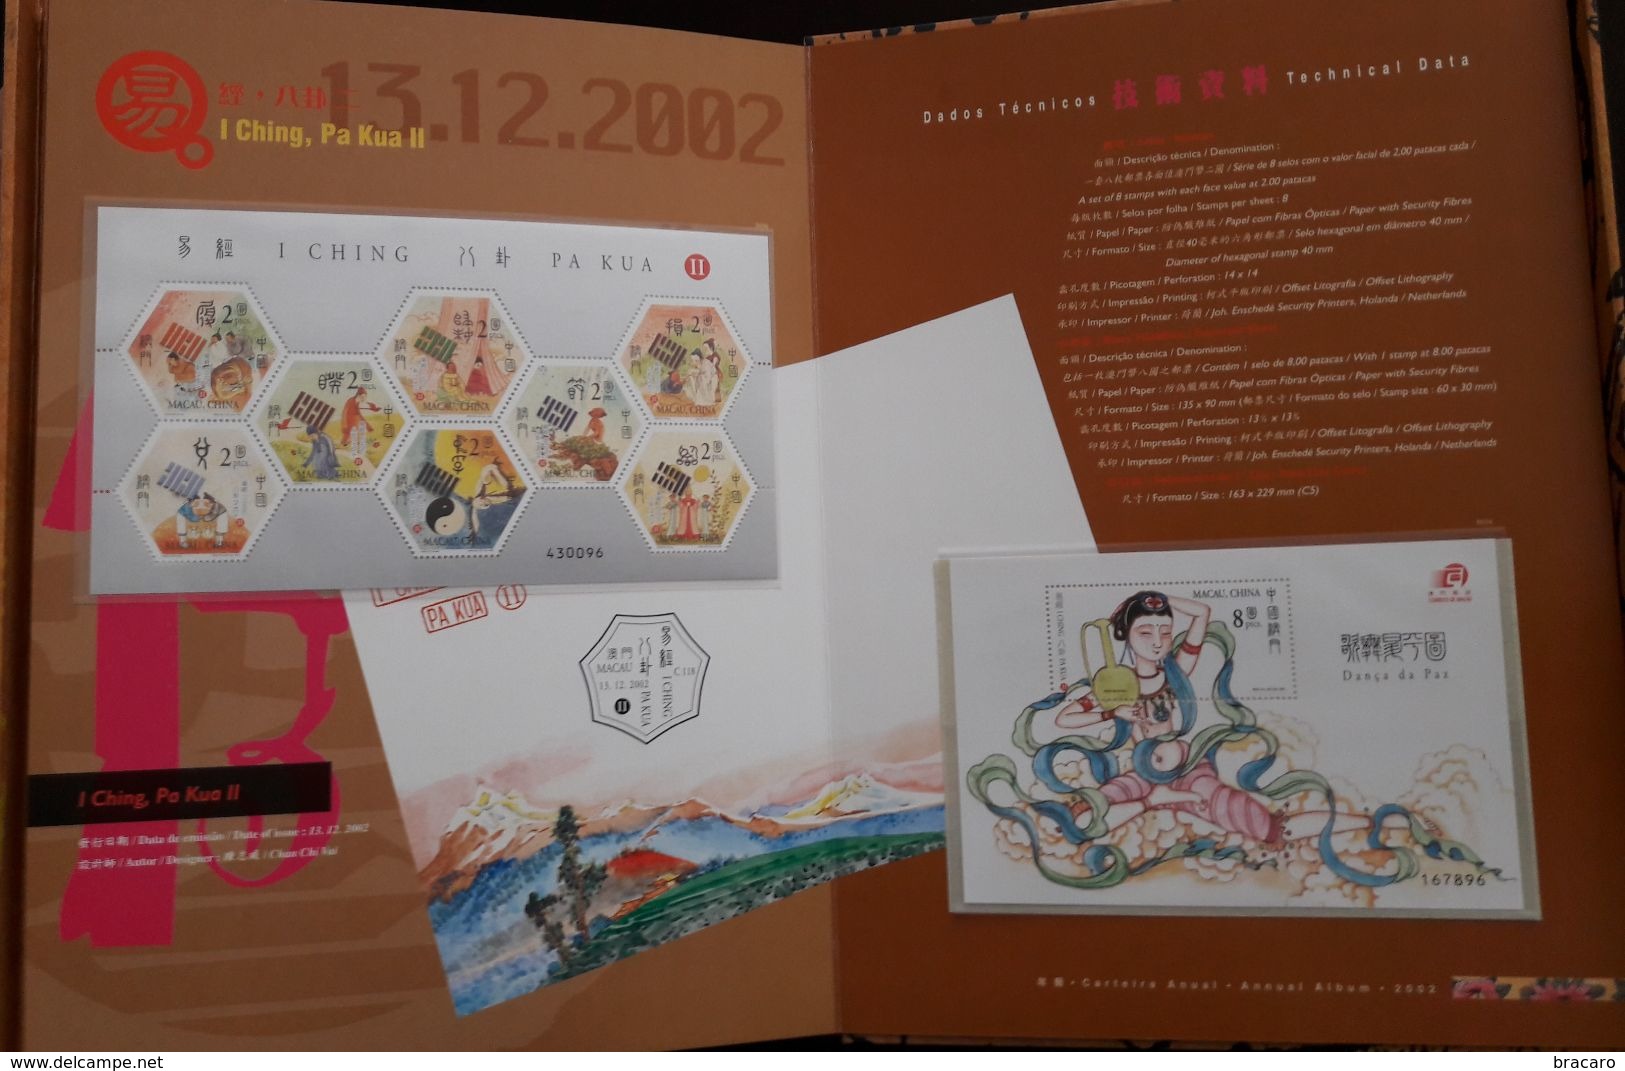 PORTUGAL - MACAU / MACAO - 2002 ANNUAL ALBUM - 13 series: selos, minifolhas e blocos / stamps, sheetlets and blocks MNH